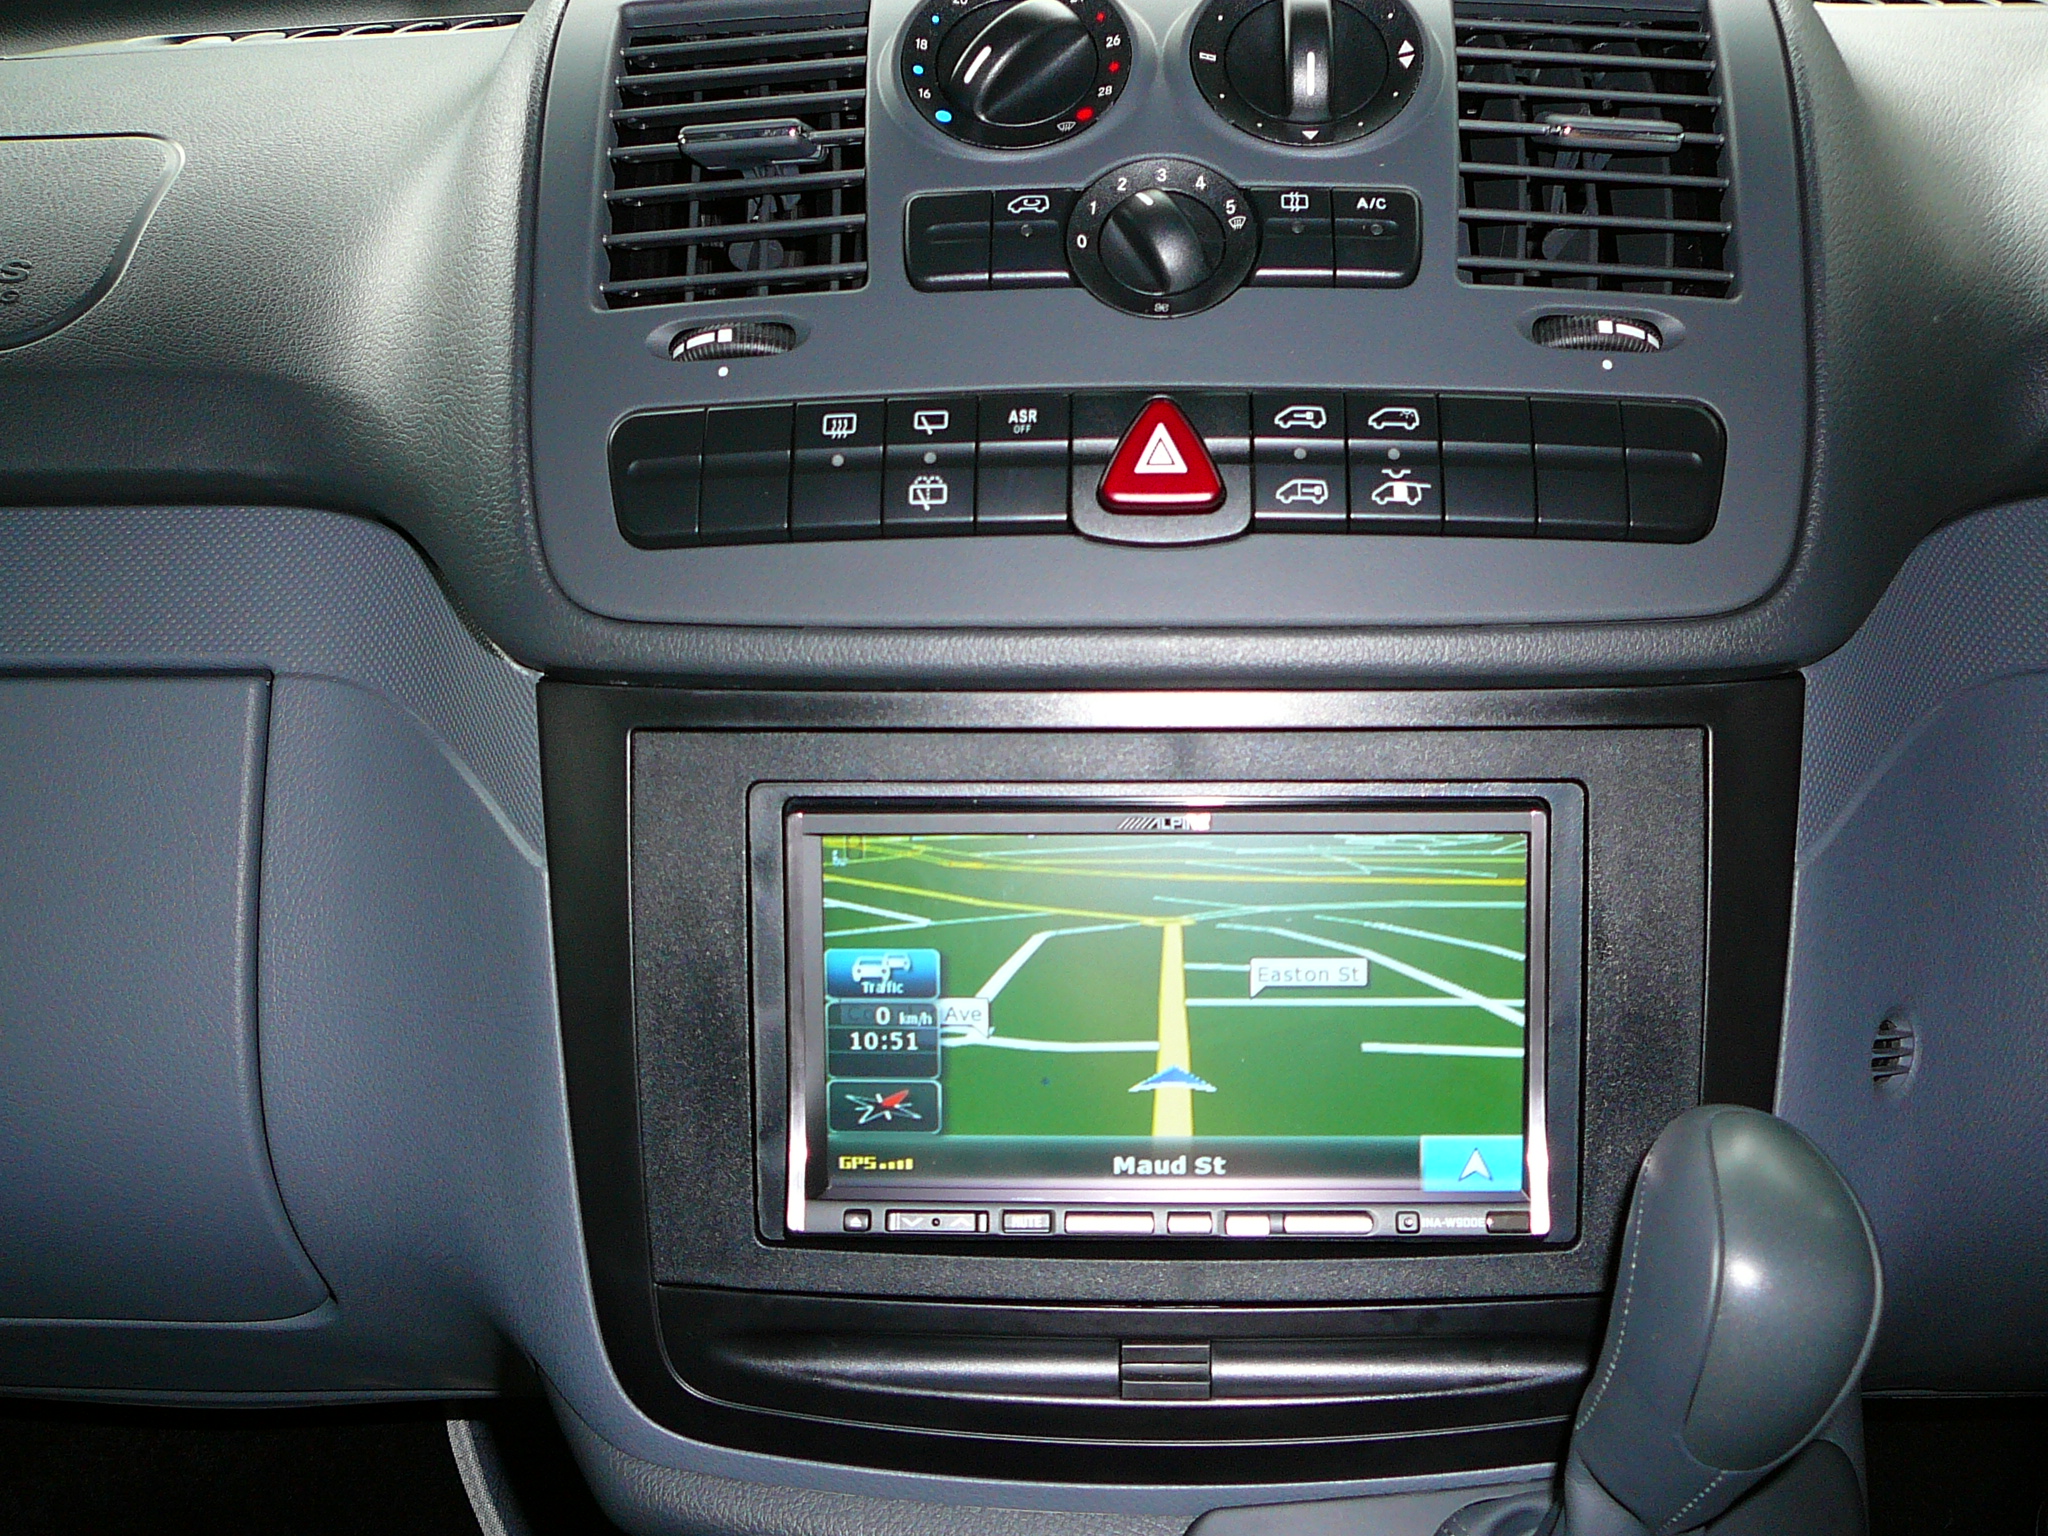 Mercedes Vito 2010 Indash GPS Navigation DVD, CD, Radio, iPod, iPhone, Bluetooth Handsfree